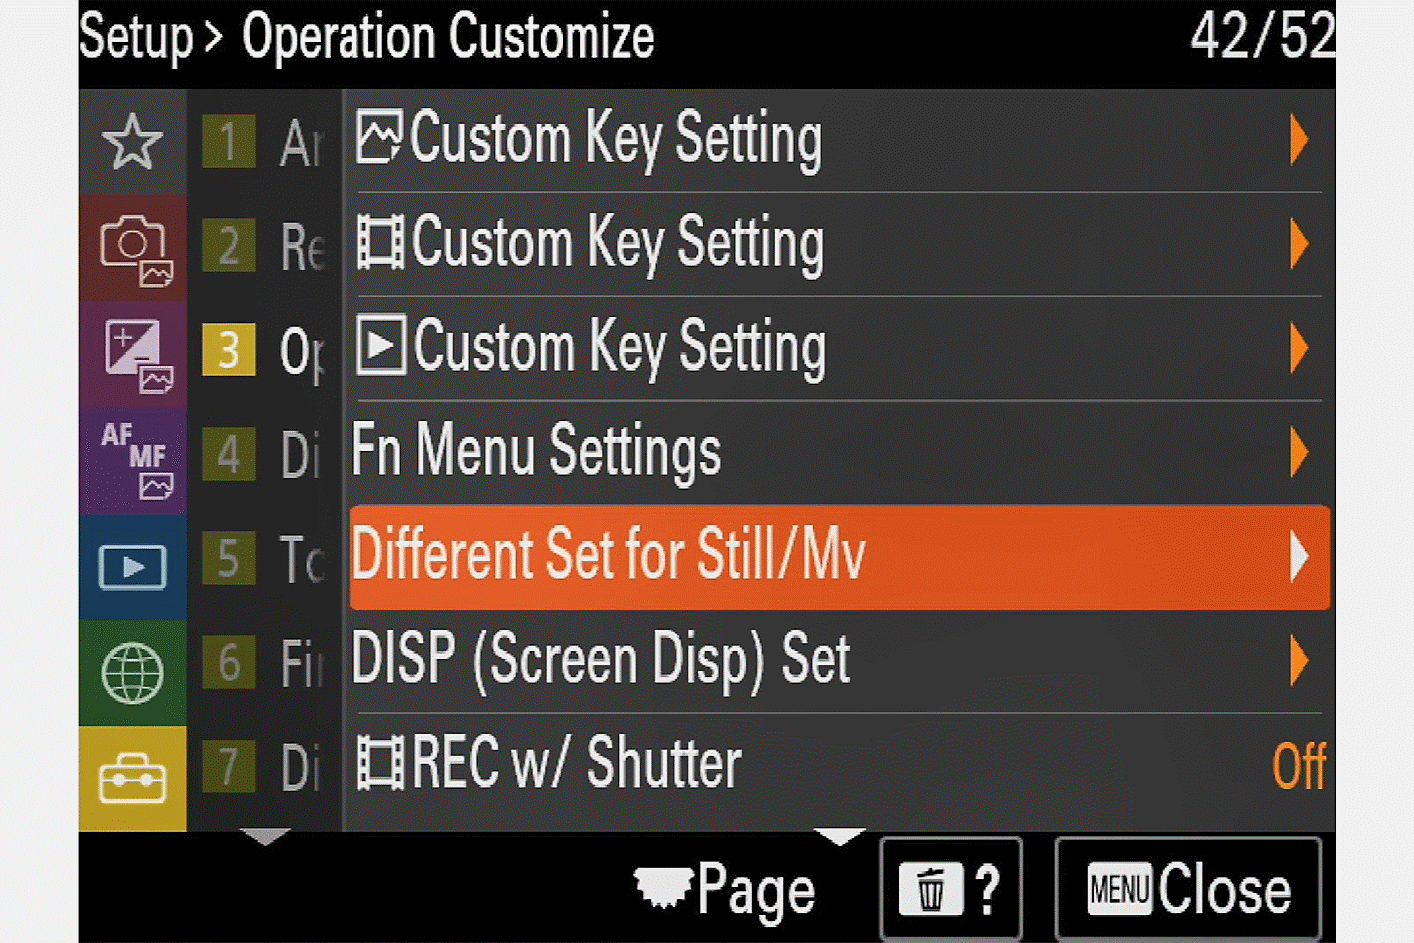 Menú "Operation Customize" (personalizar manejo) con el cursor sobre "Different Set for Still/MV" (diferente para foto/video)